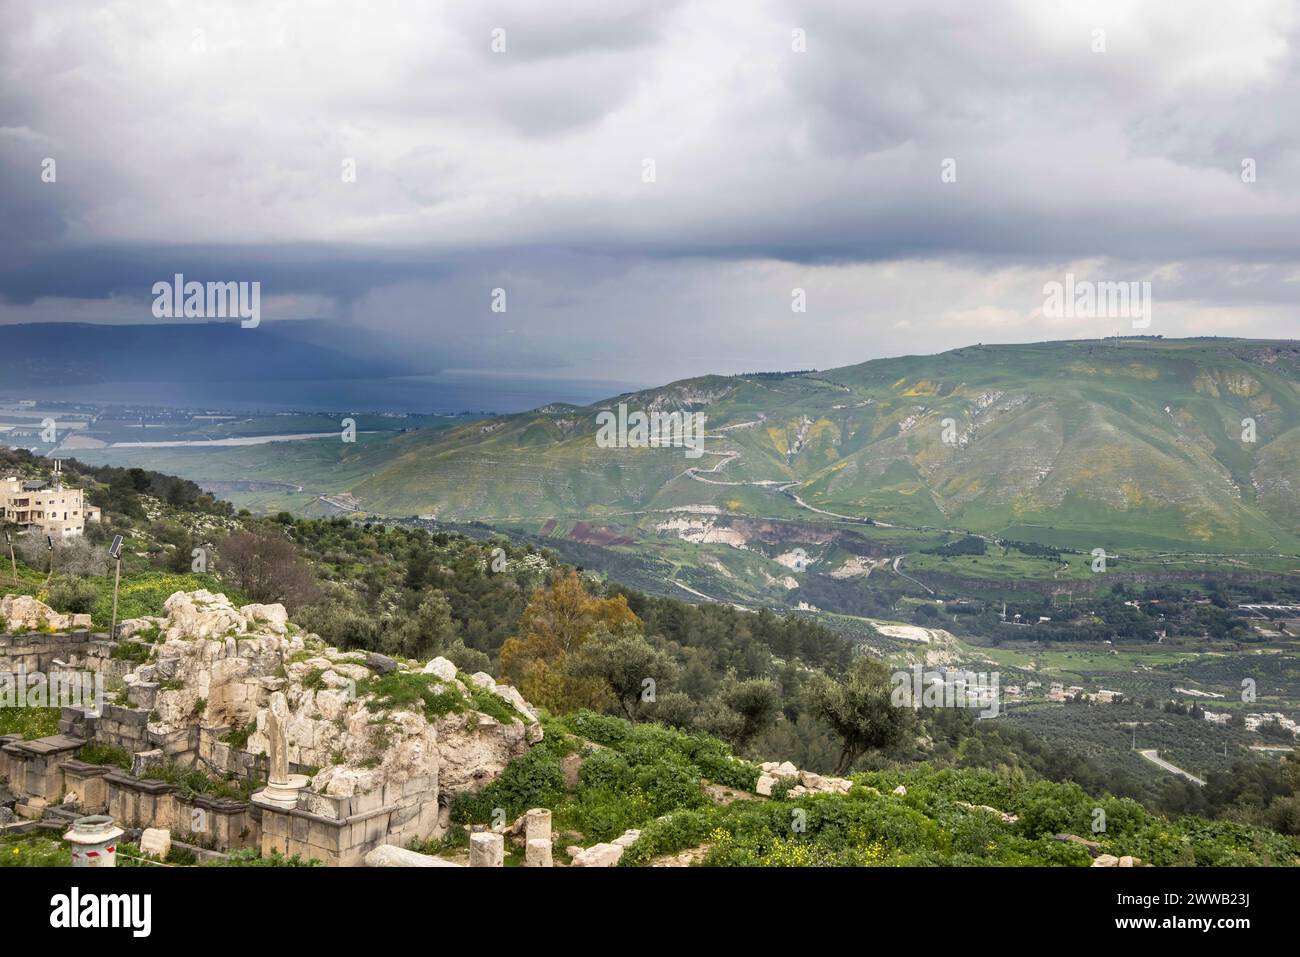 views to the golan heights in israel from the roman ruins at umm qais ( formally called gadara) jordan Stock Photo